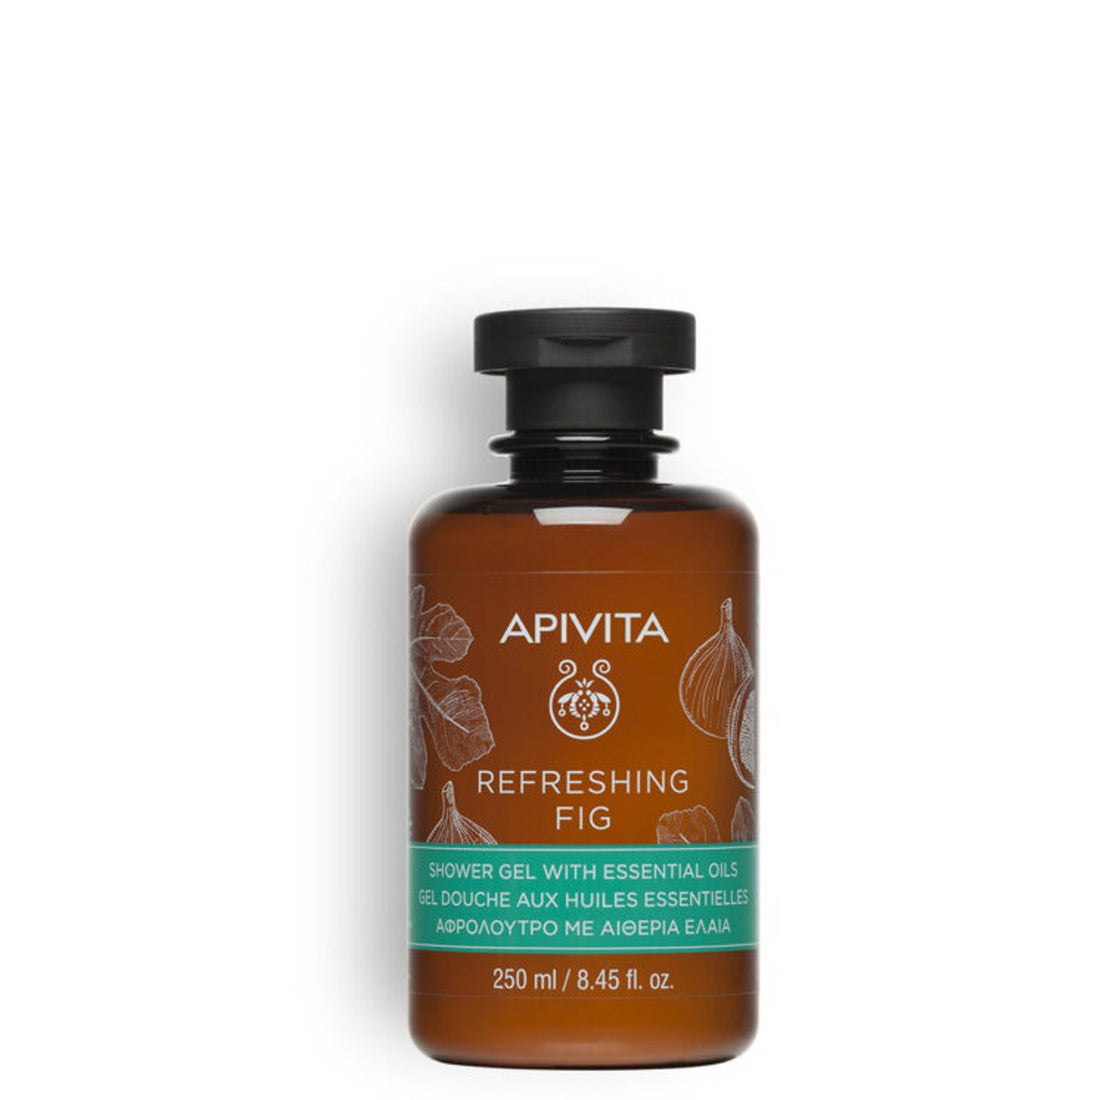 Apivita Refreshing Fig Shower Gel With Essential Oils 250 ml